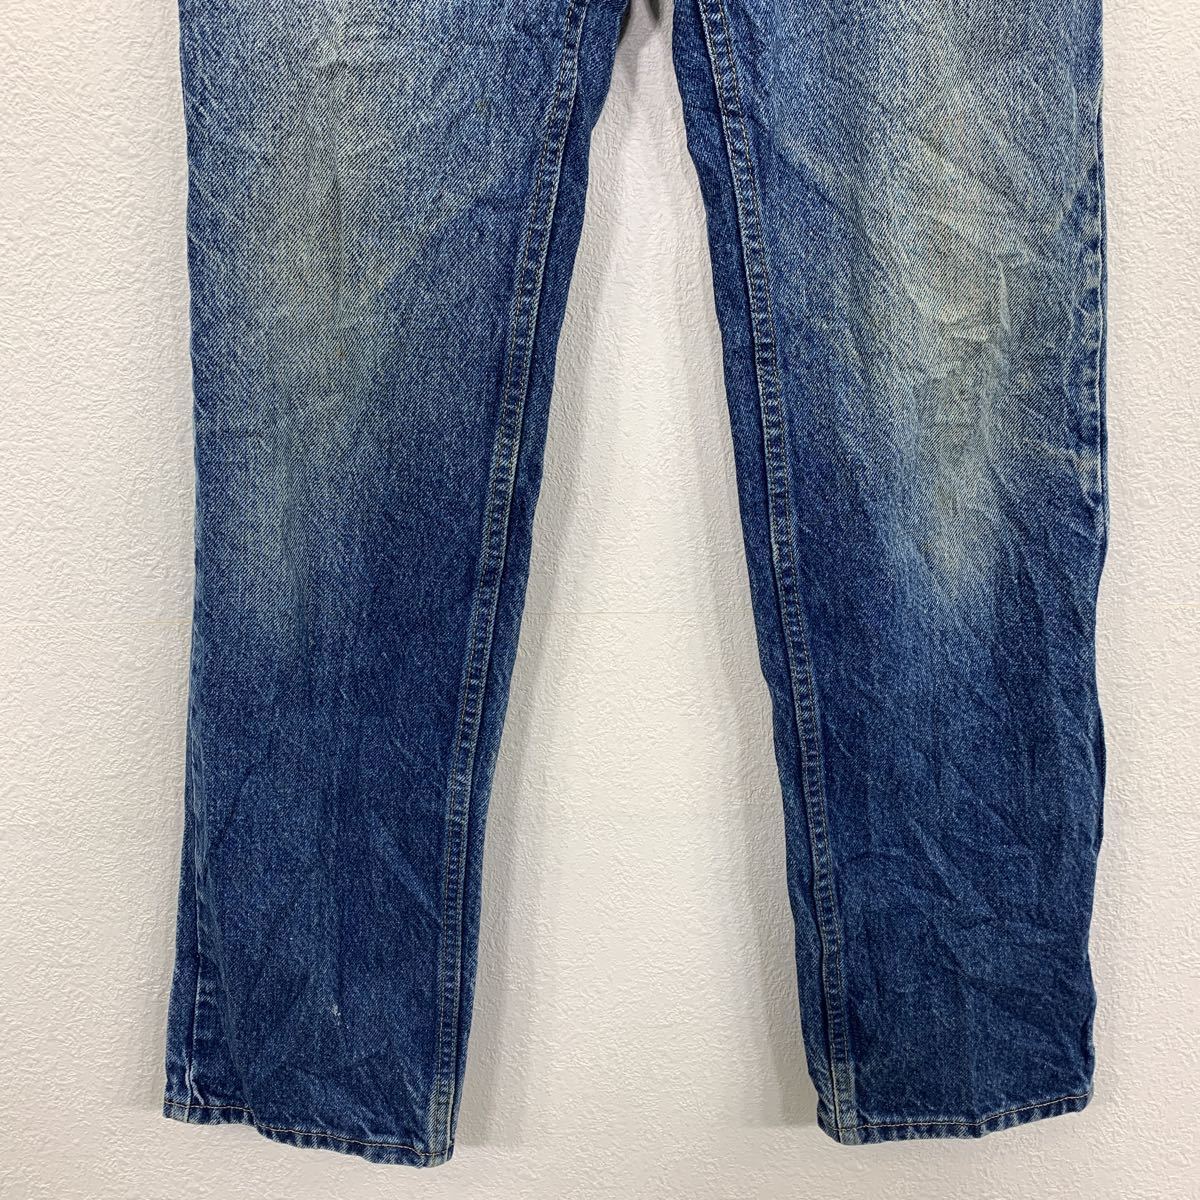 Lee Denim брюки W30 Lee голубой постоянный Fit б/у одежда . America скупка 2305-475